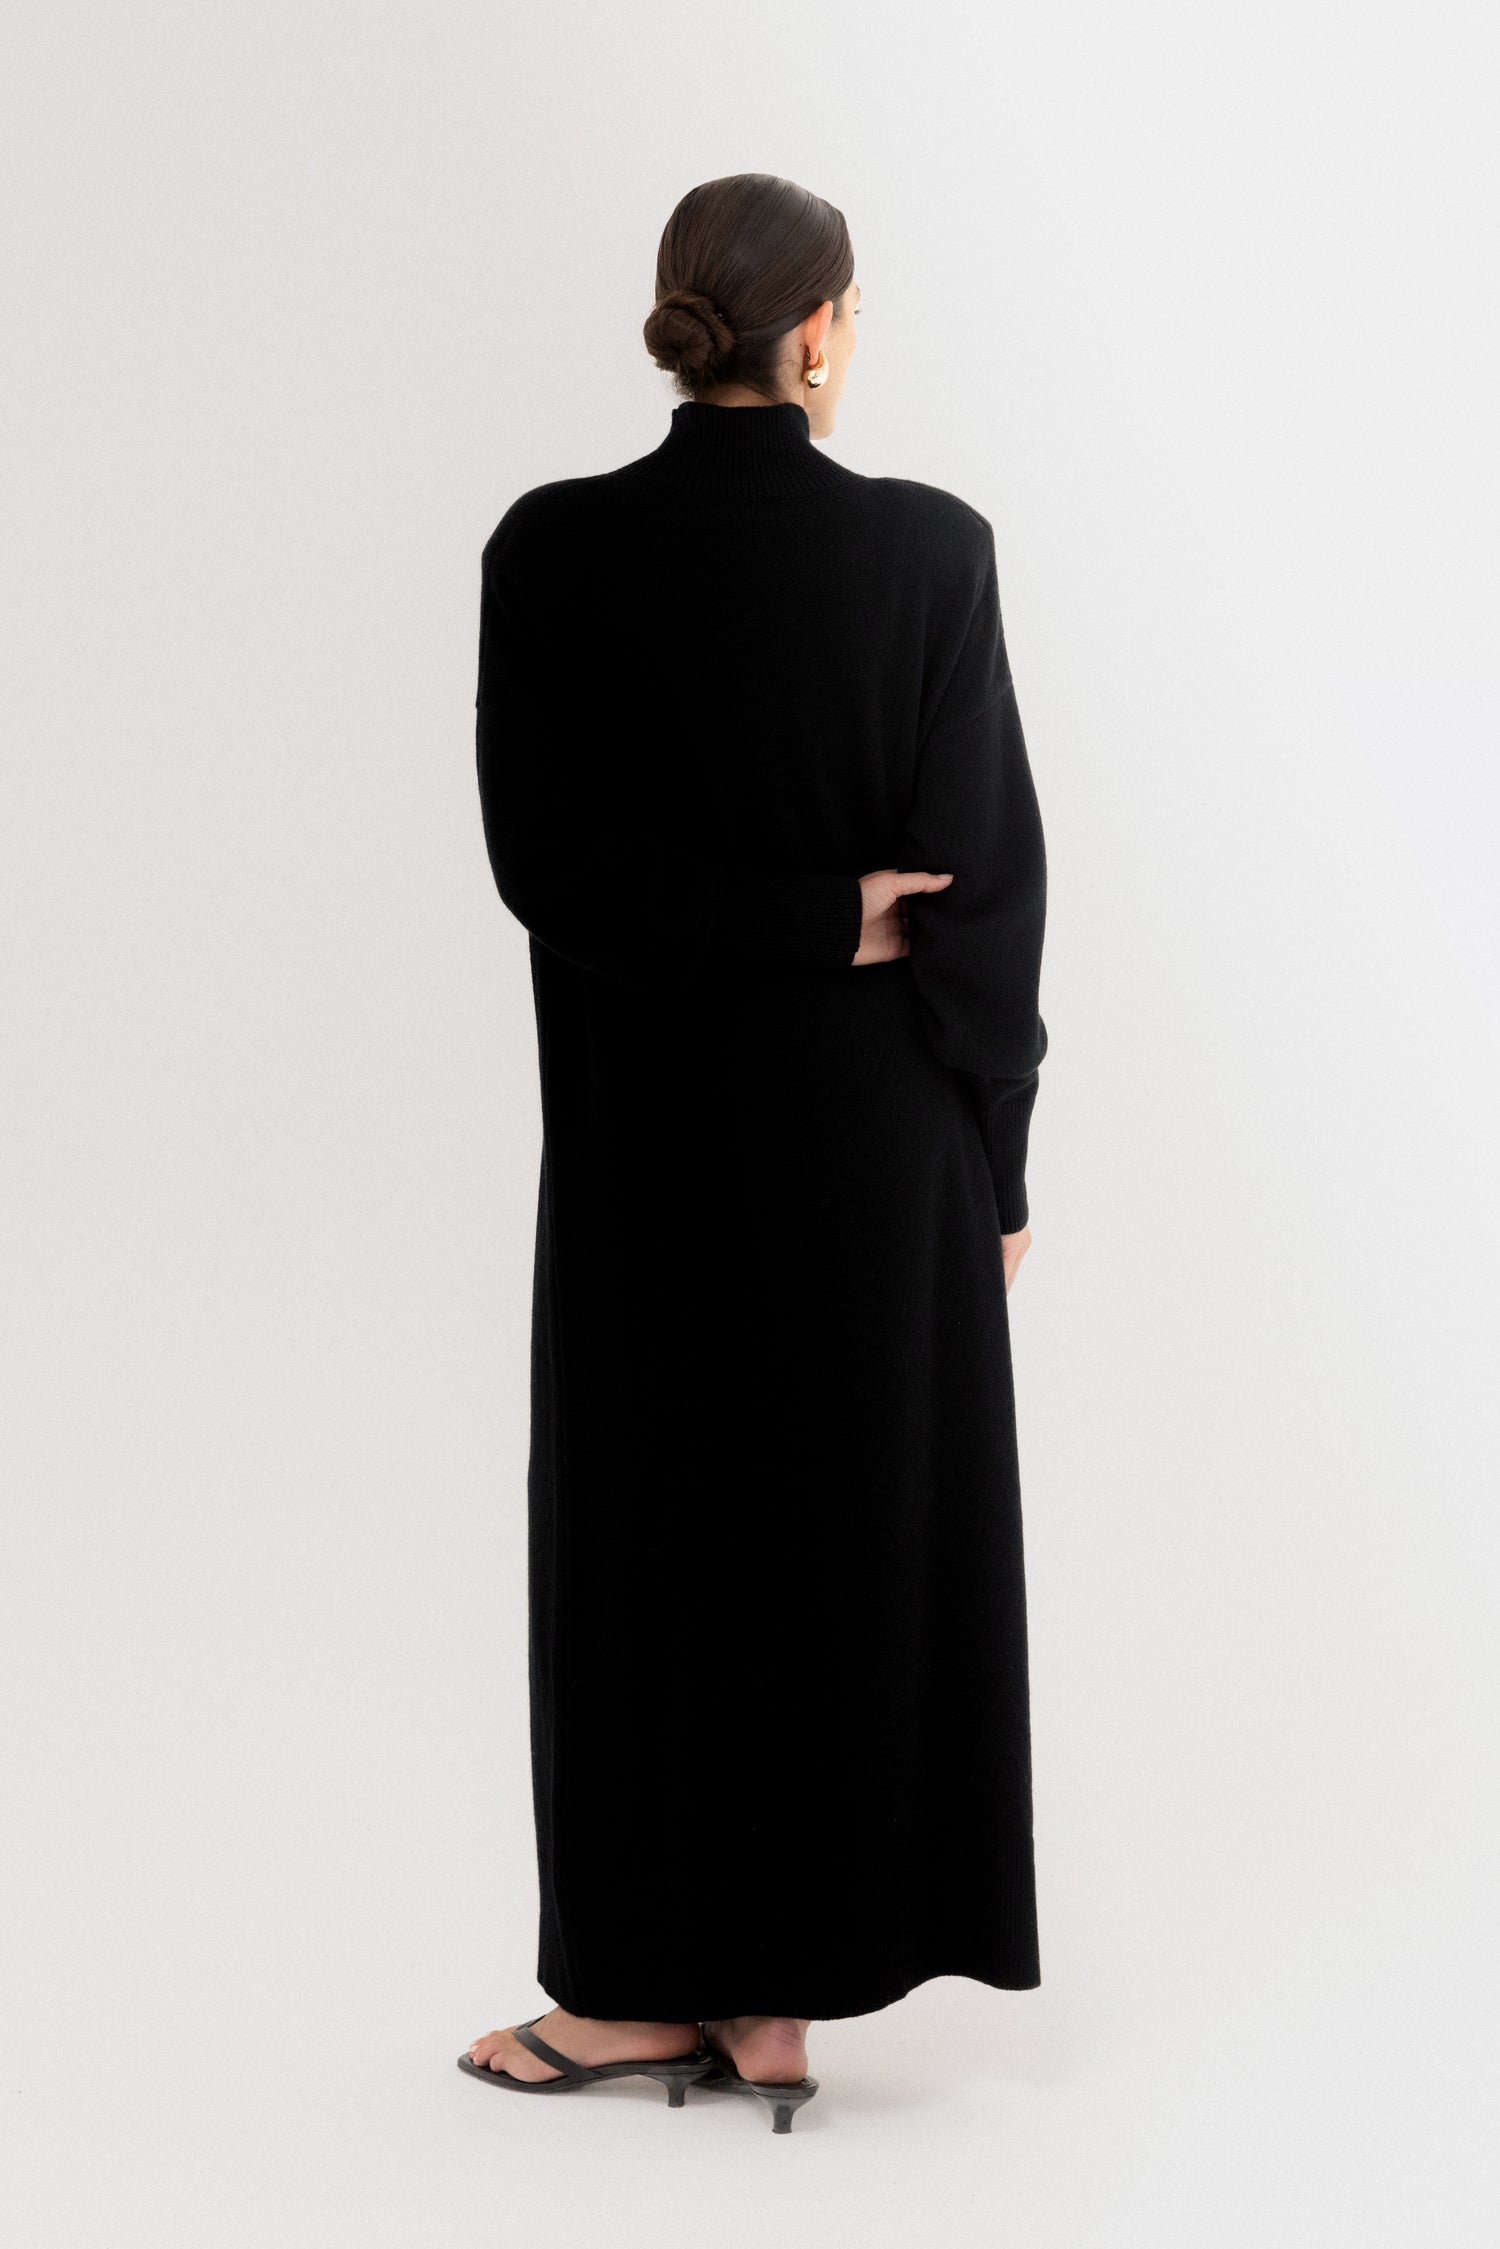 Zea Turtleneck Dress, black